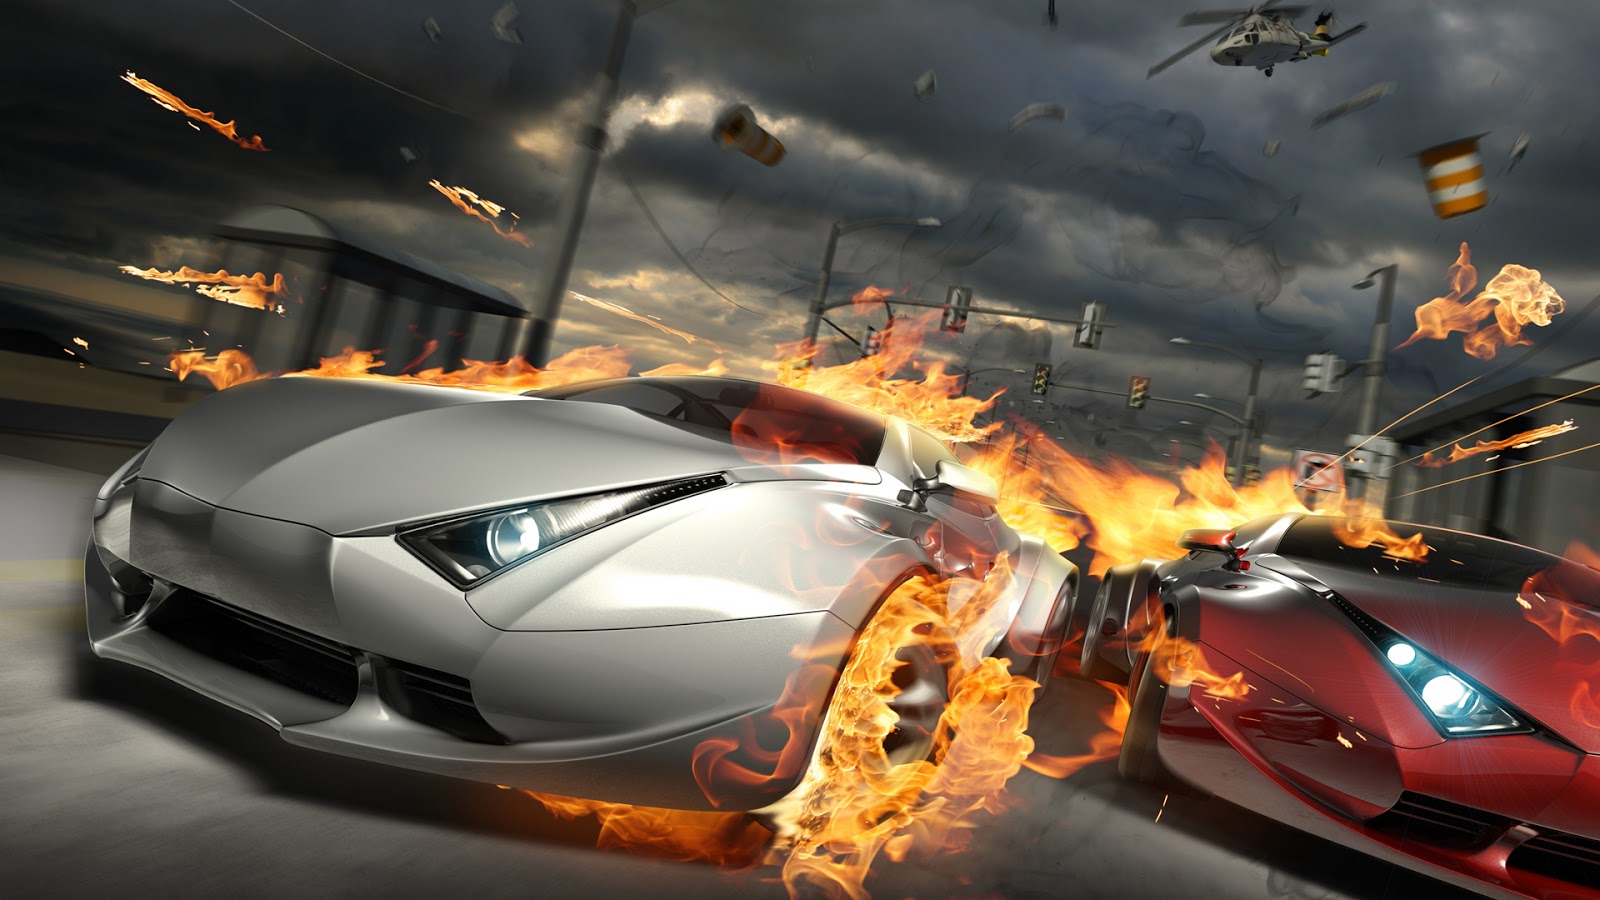 Burning Car Race HD 1080p Burnout Revenge Accident Wallpaper